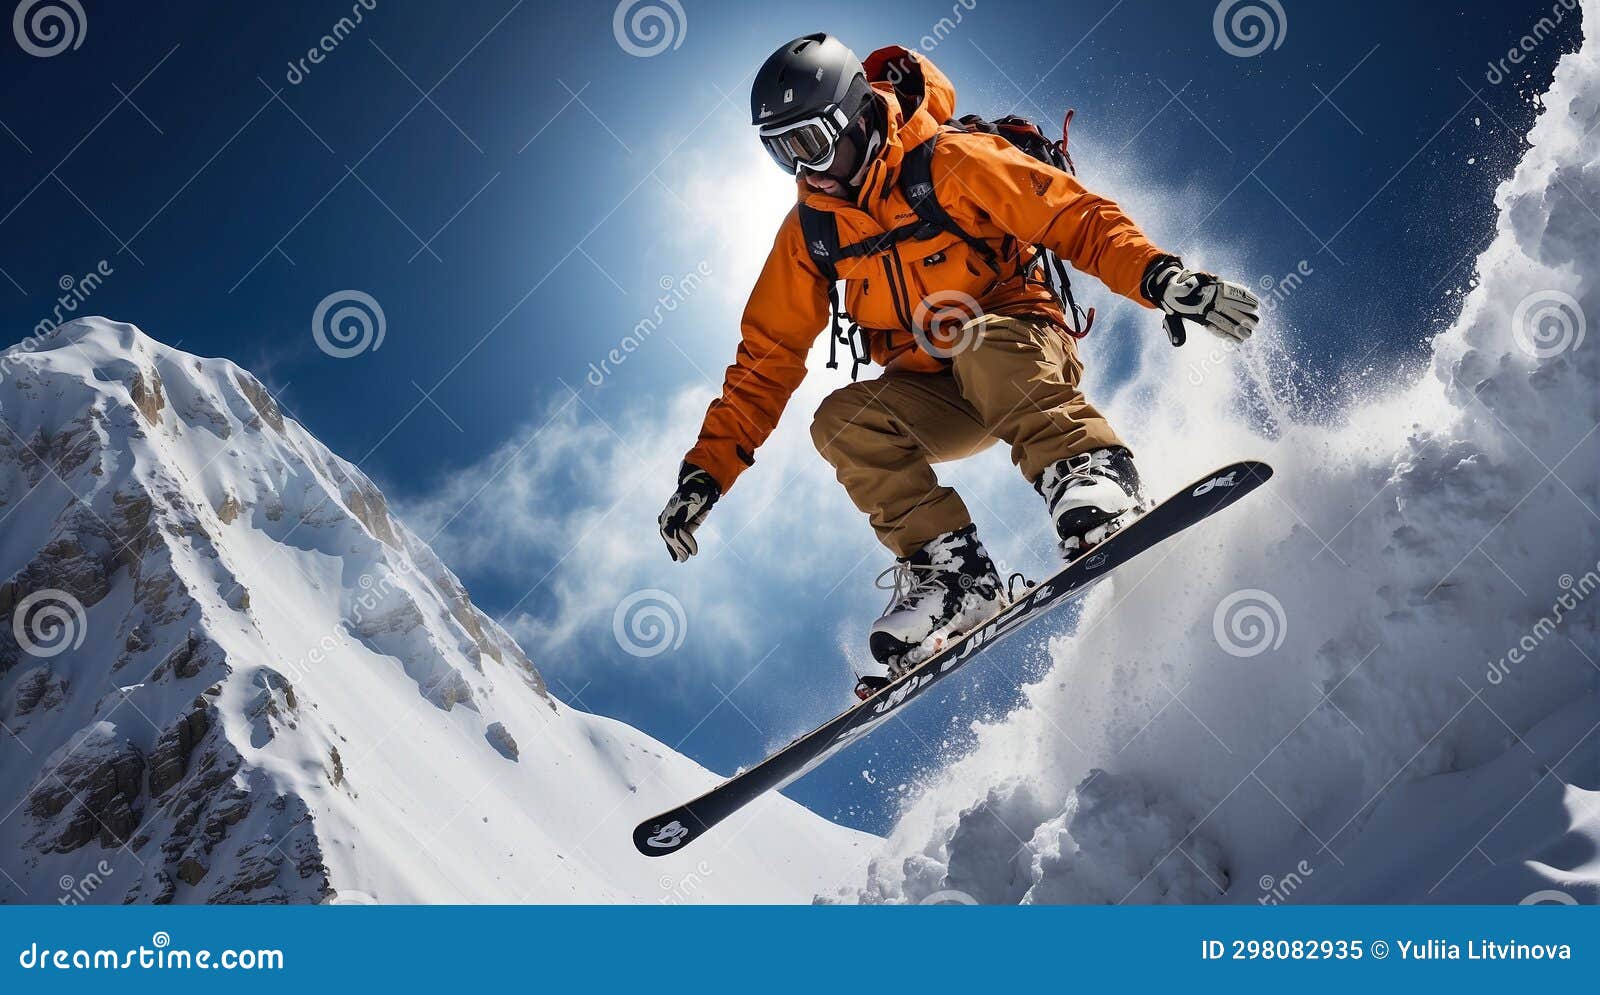 winter ski resort with snowboards.